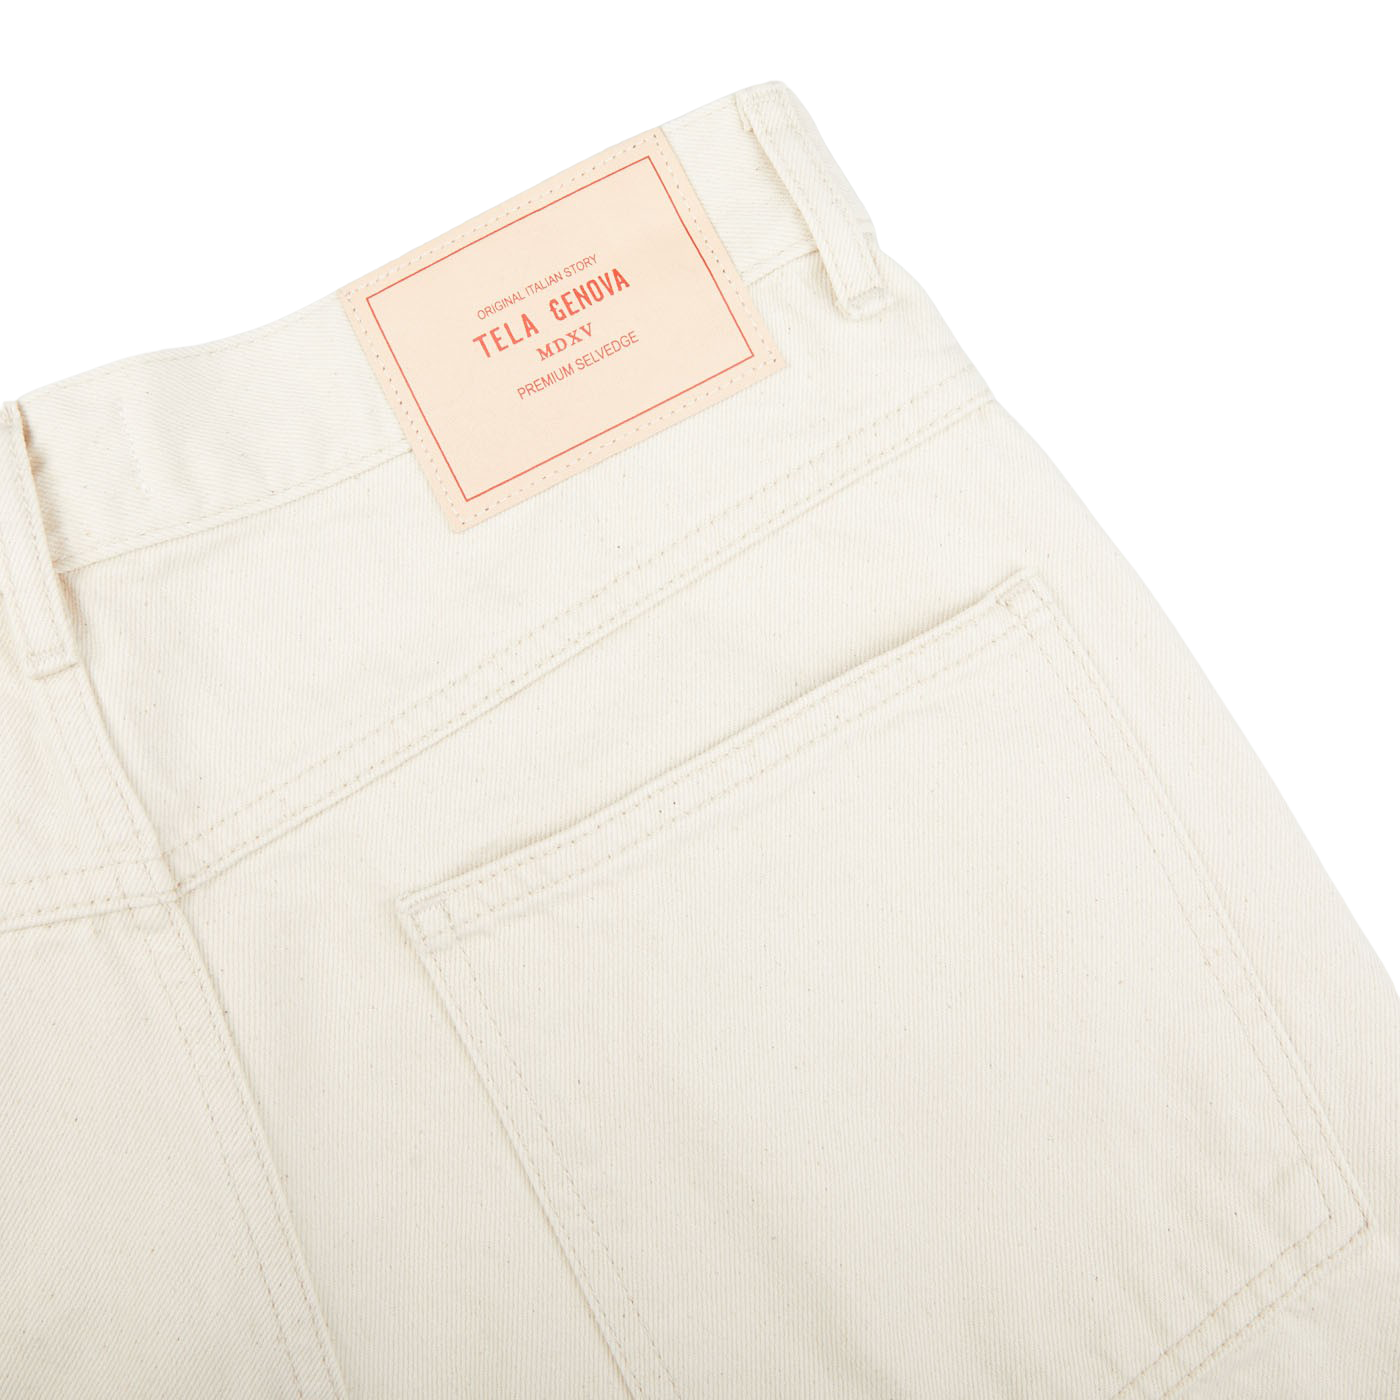 Tela Genova Natural Beige Cotton Selvedge Jeans Pocket